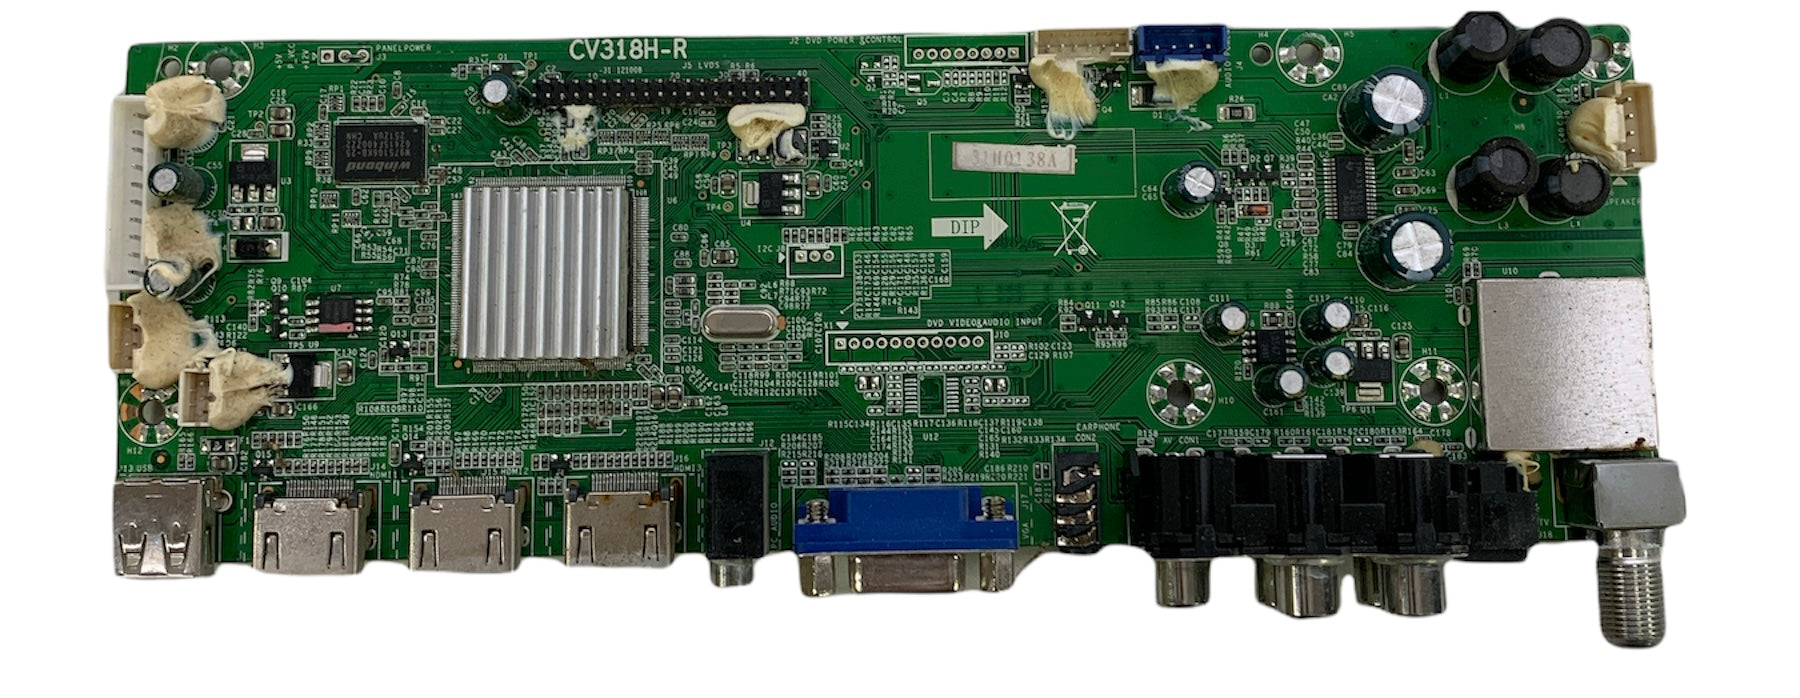 Dynex 890-M00-0LN45 (CV318H-R) Main Board for DX-32L200NA14